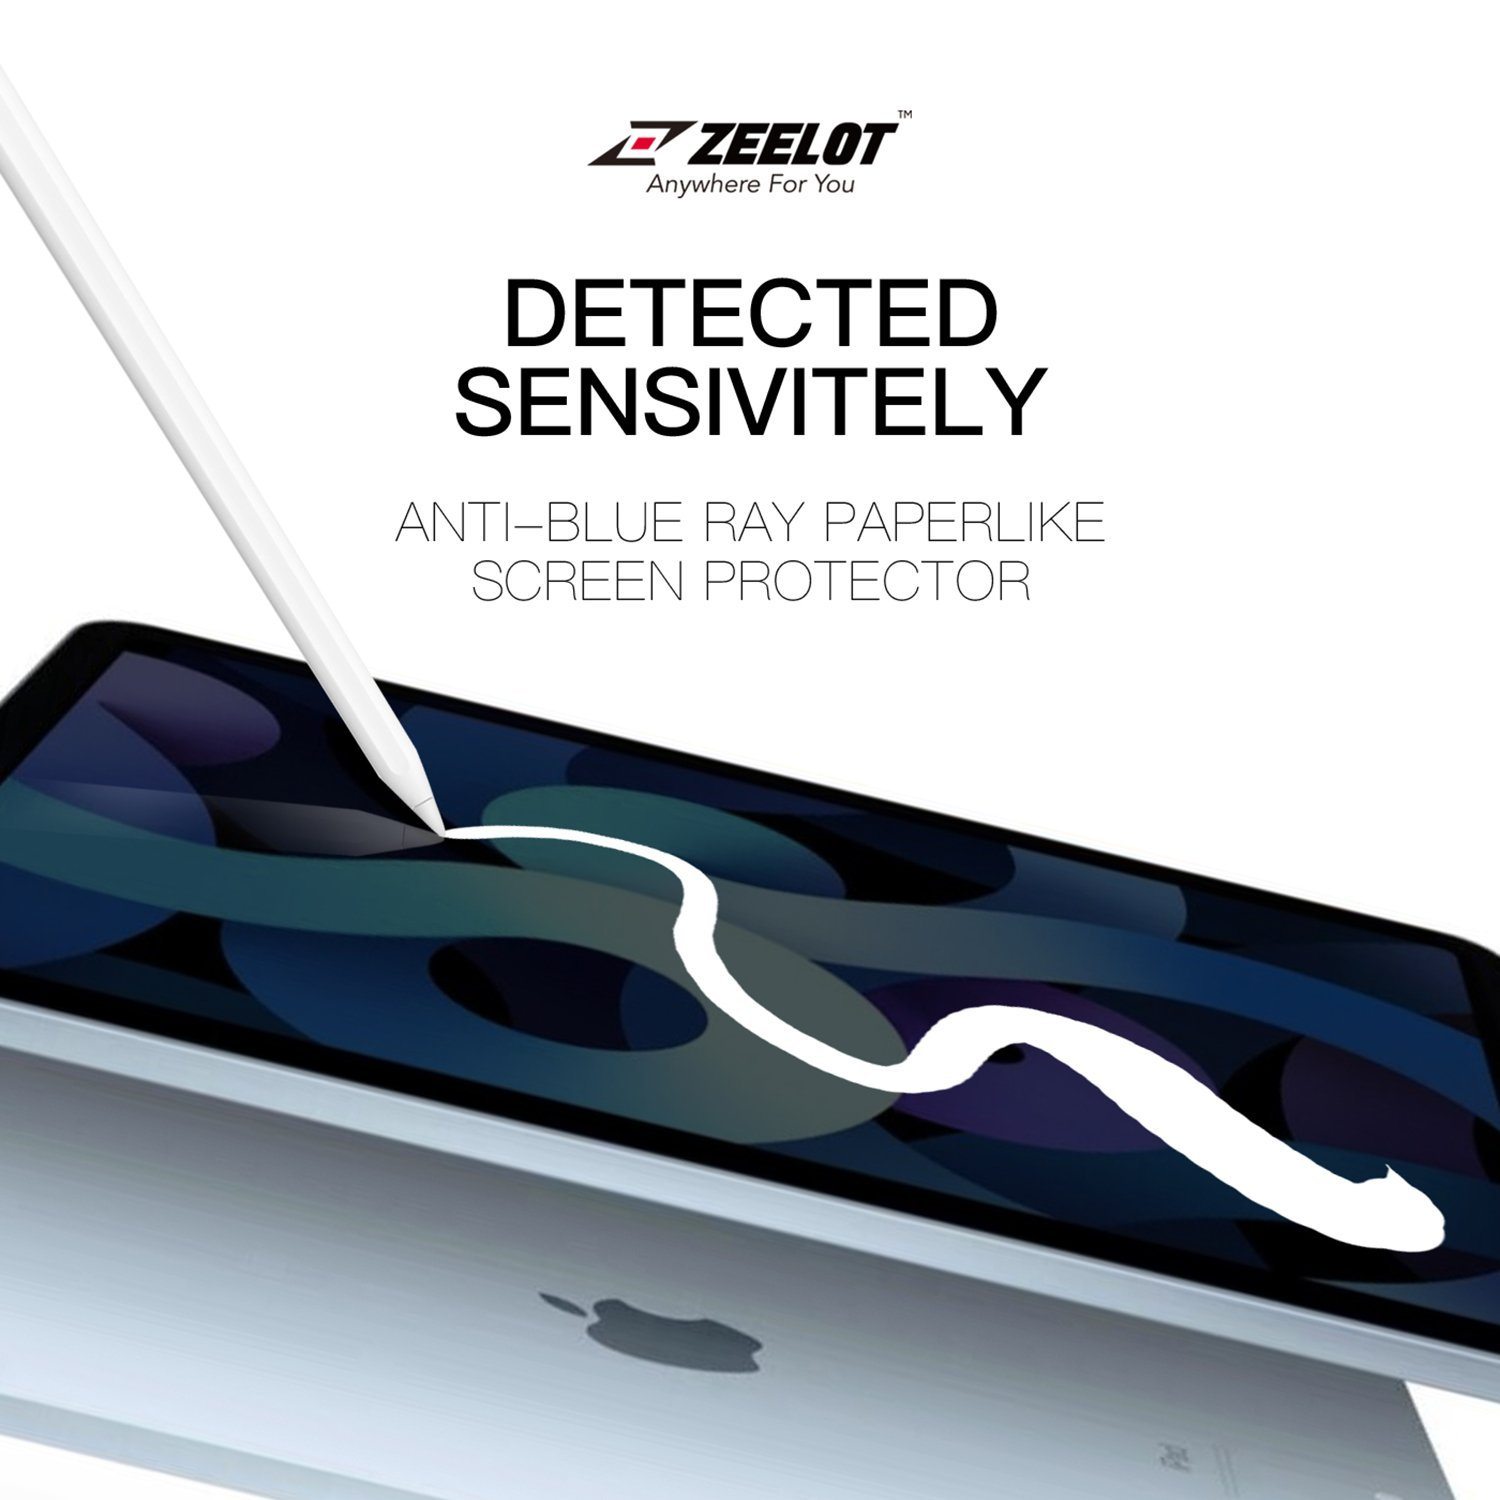 ZEELOT Paper Like Screen Protector for iPad 11"/ iPad Air 4 10.9" (2021/2018), Anti Blue Ray Default ZEELOT 